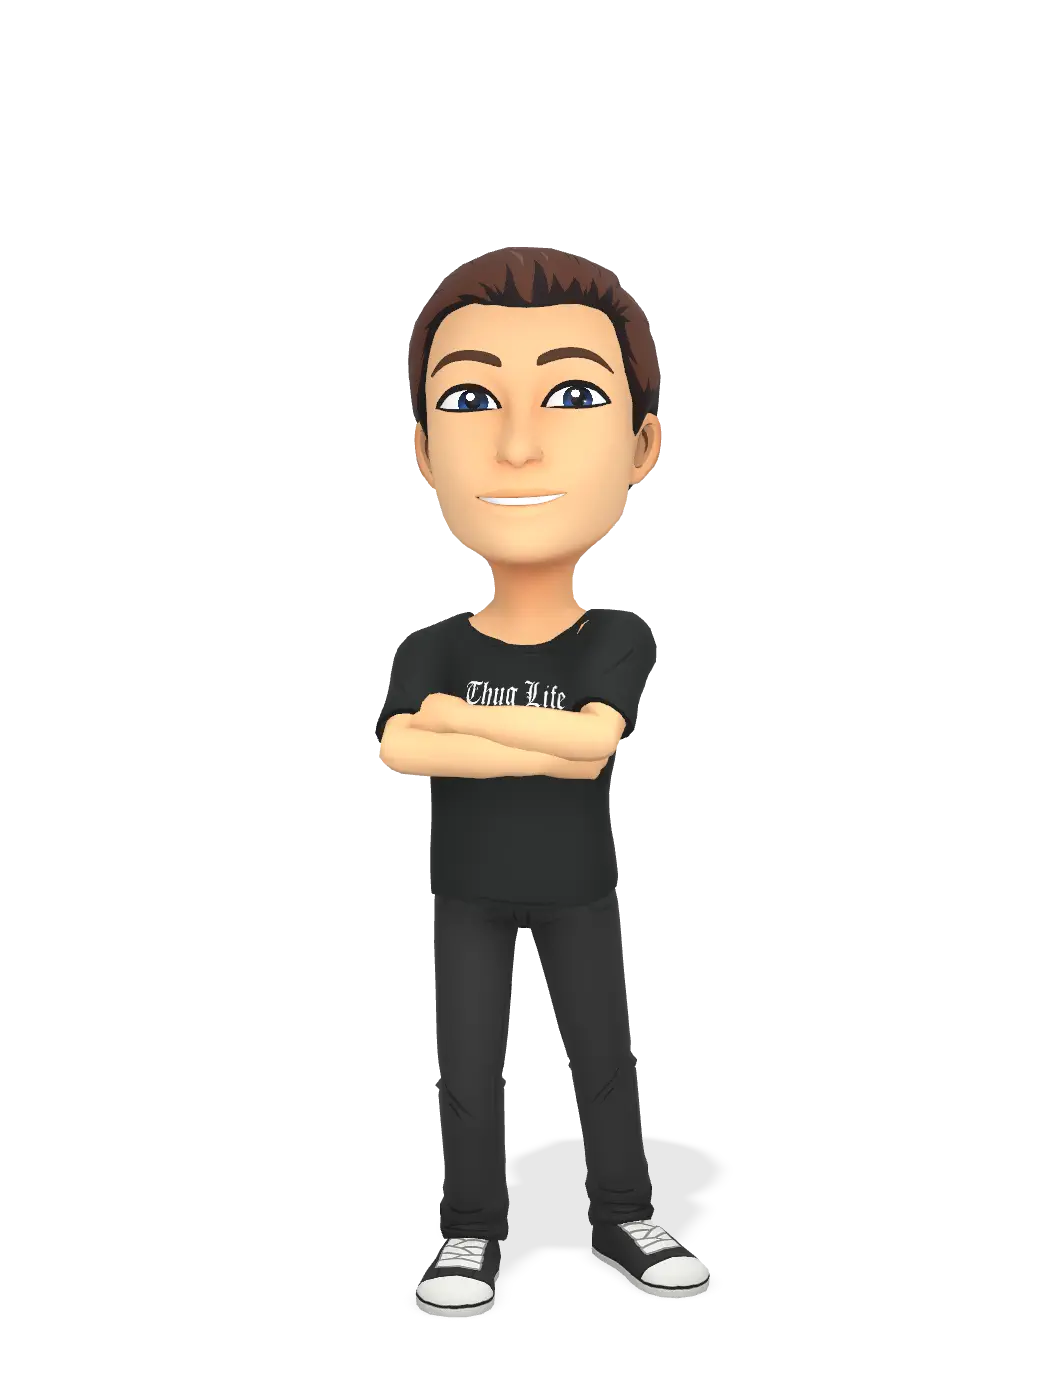 3D Bitmoji for xp_p9 avatar